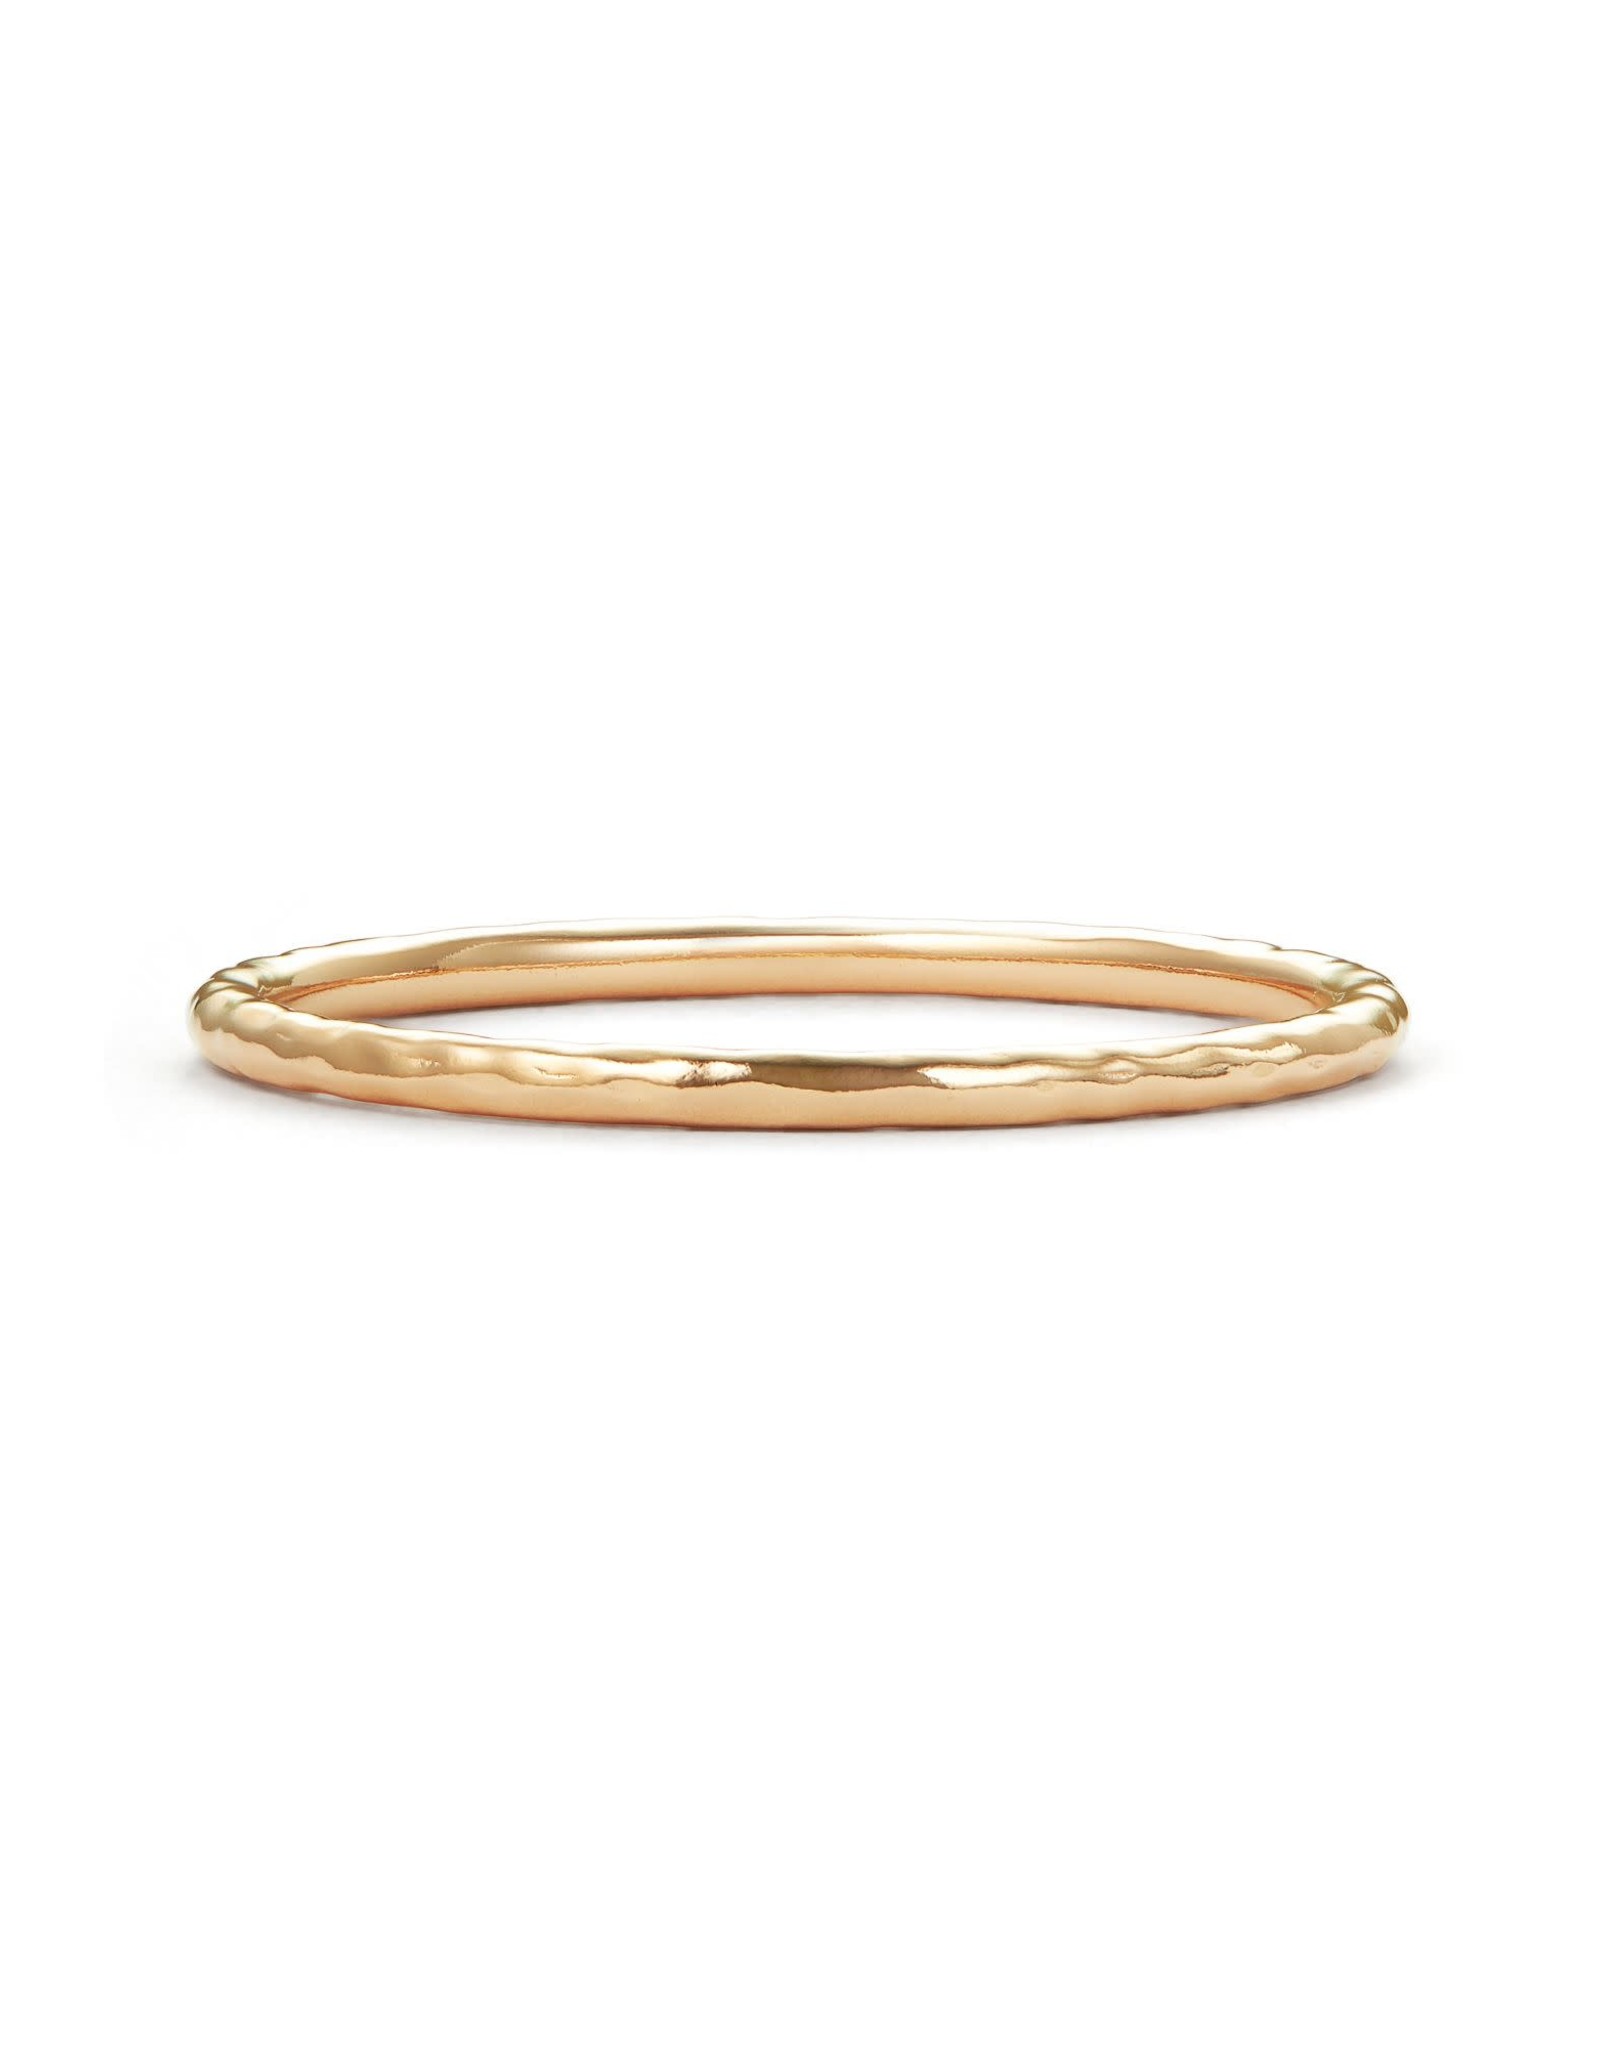 Kendra Scott Larissa Band Ring - Size 7 - 18k Rose Gold Vermeil